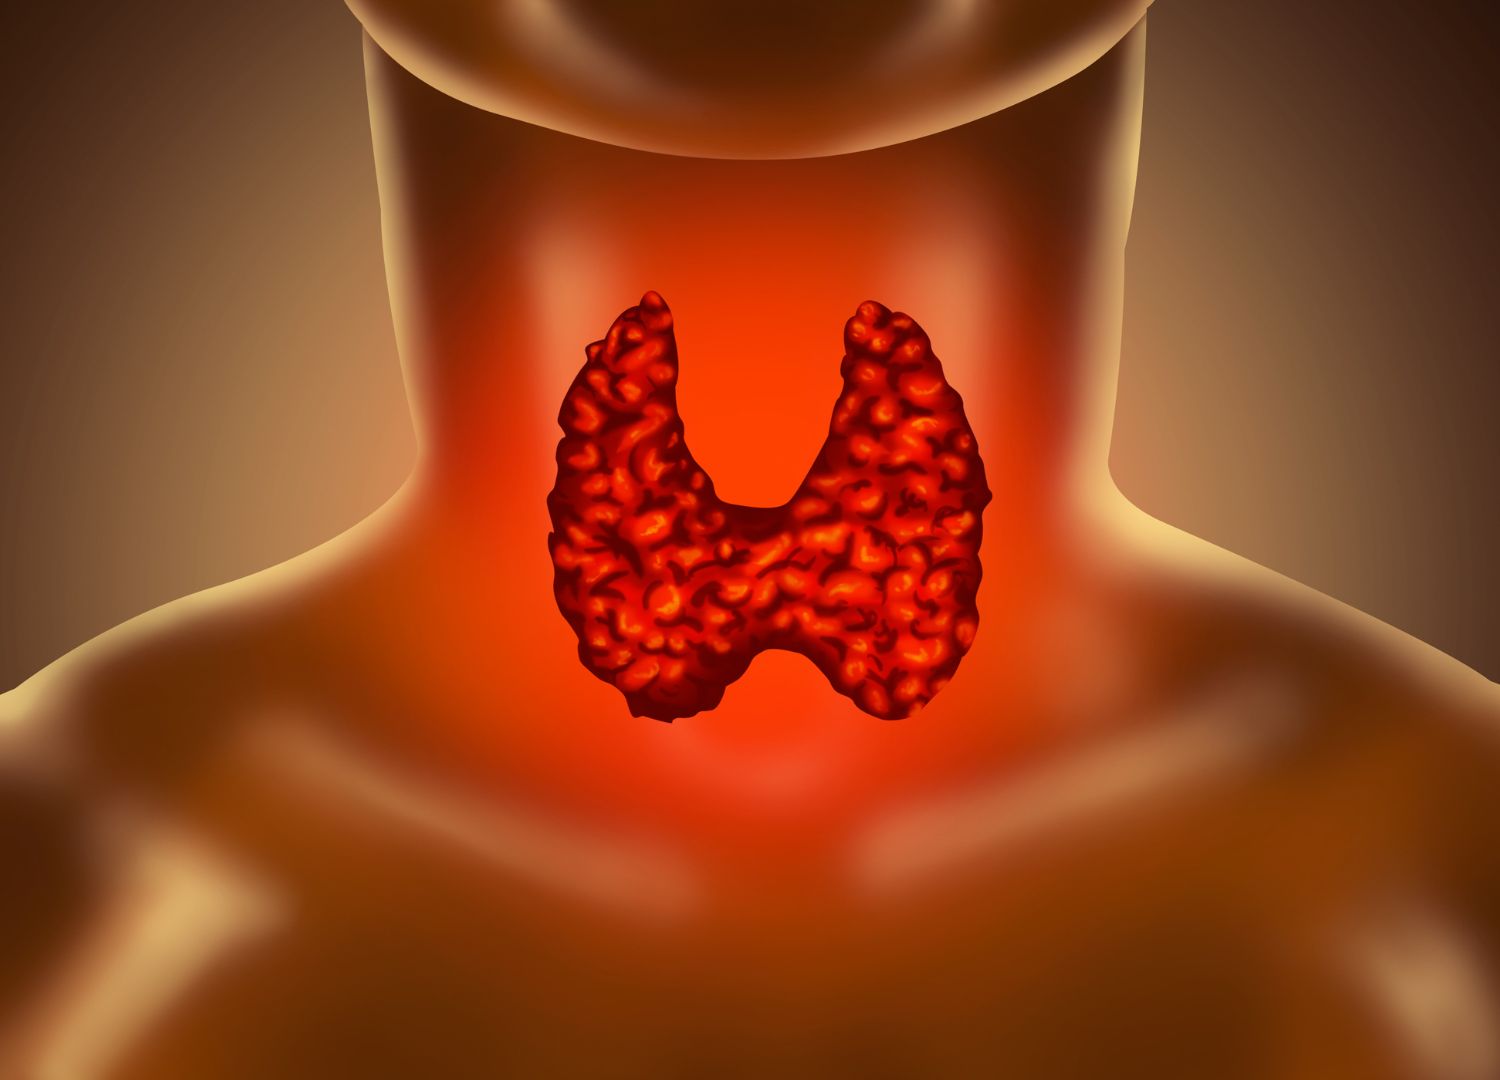 Hypothyroidism: Underactive thyroid function